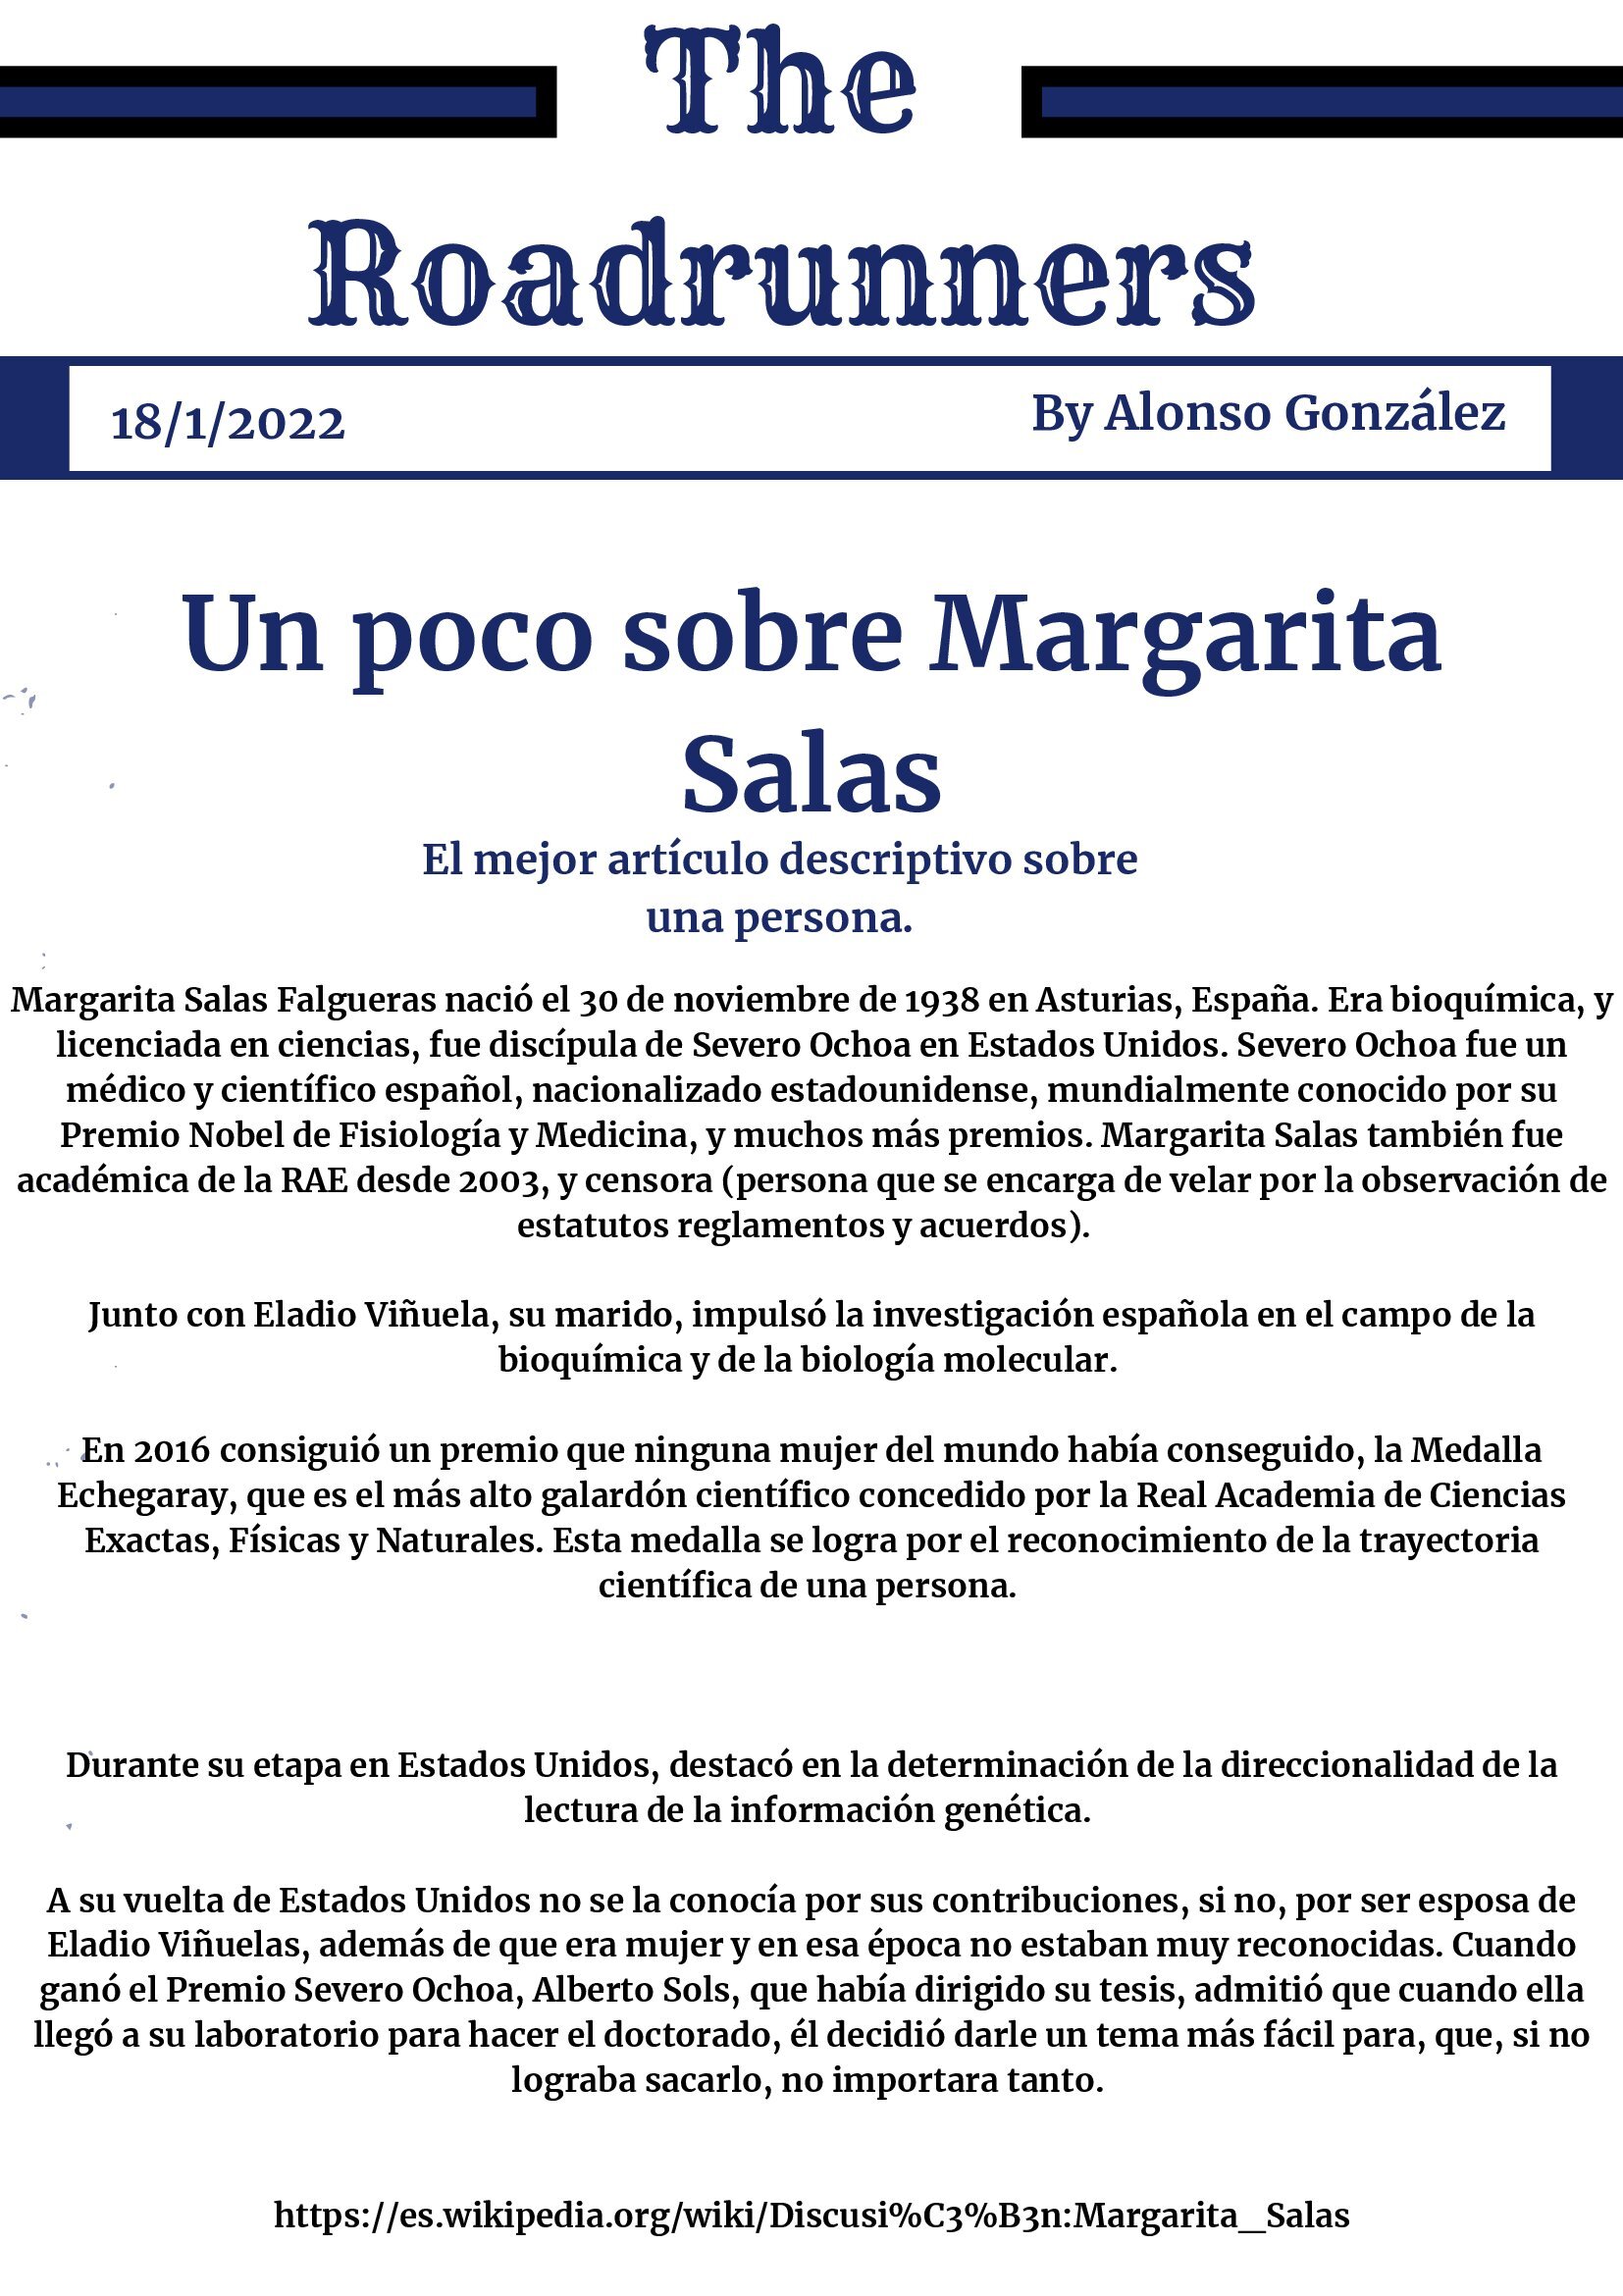 Artículo Margarita Salas - Alonso González Barrenechea